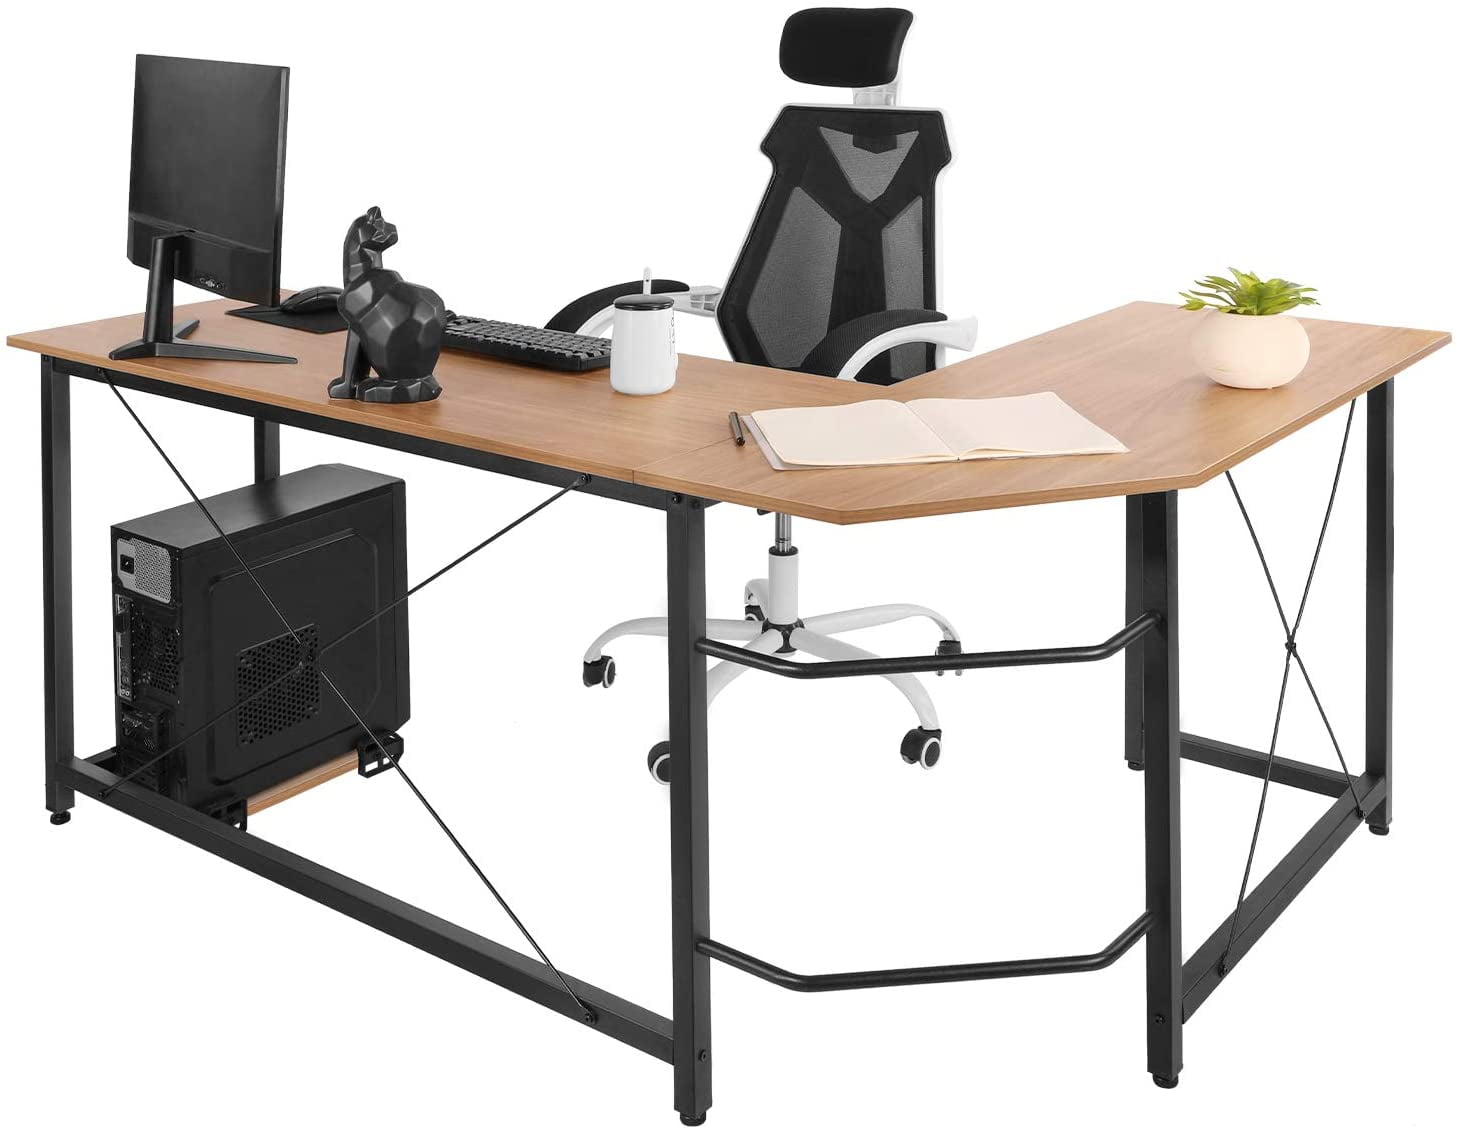 Plans & Build Guide For:kx Computer Desk Home Office / Gaming Desk